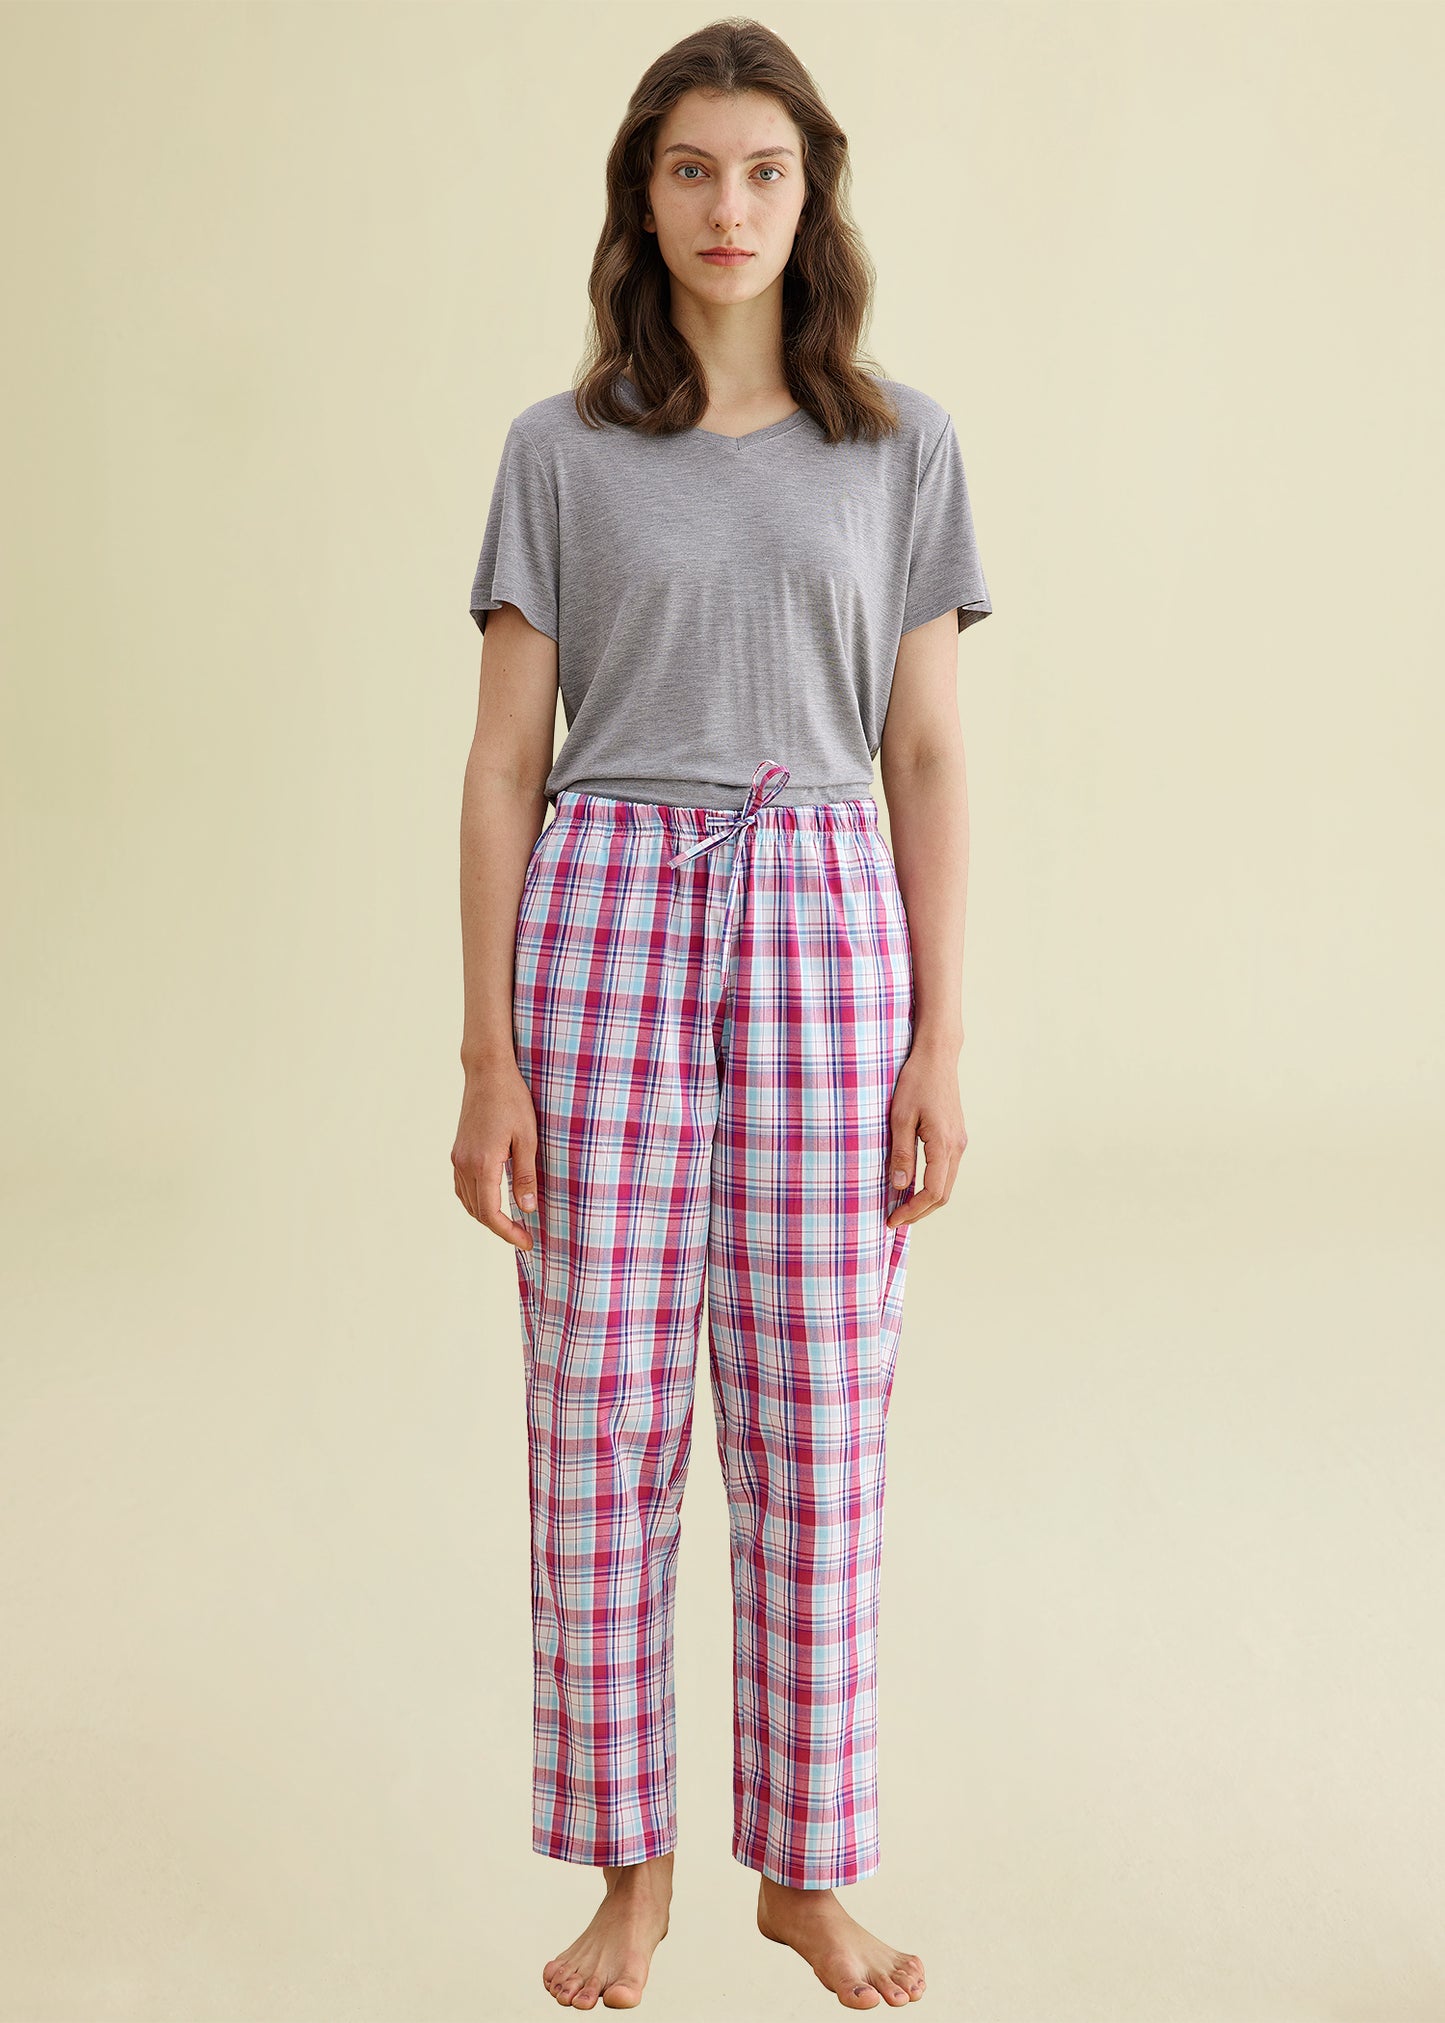 Women's Plaid Pajamas Pants Cotton Sleepwear with Pockets – Latuza